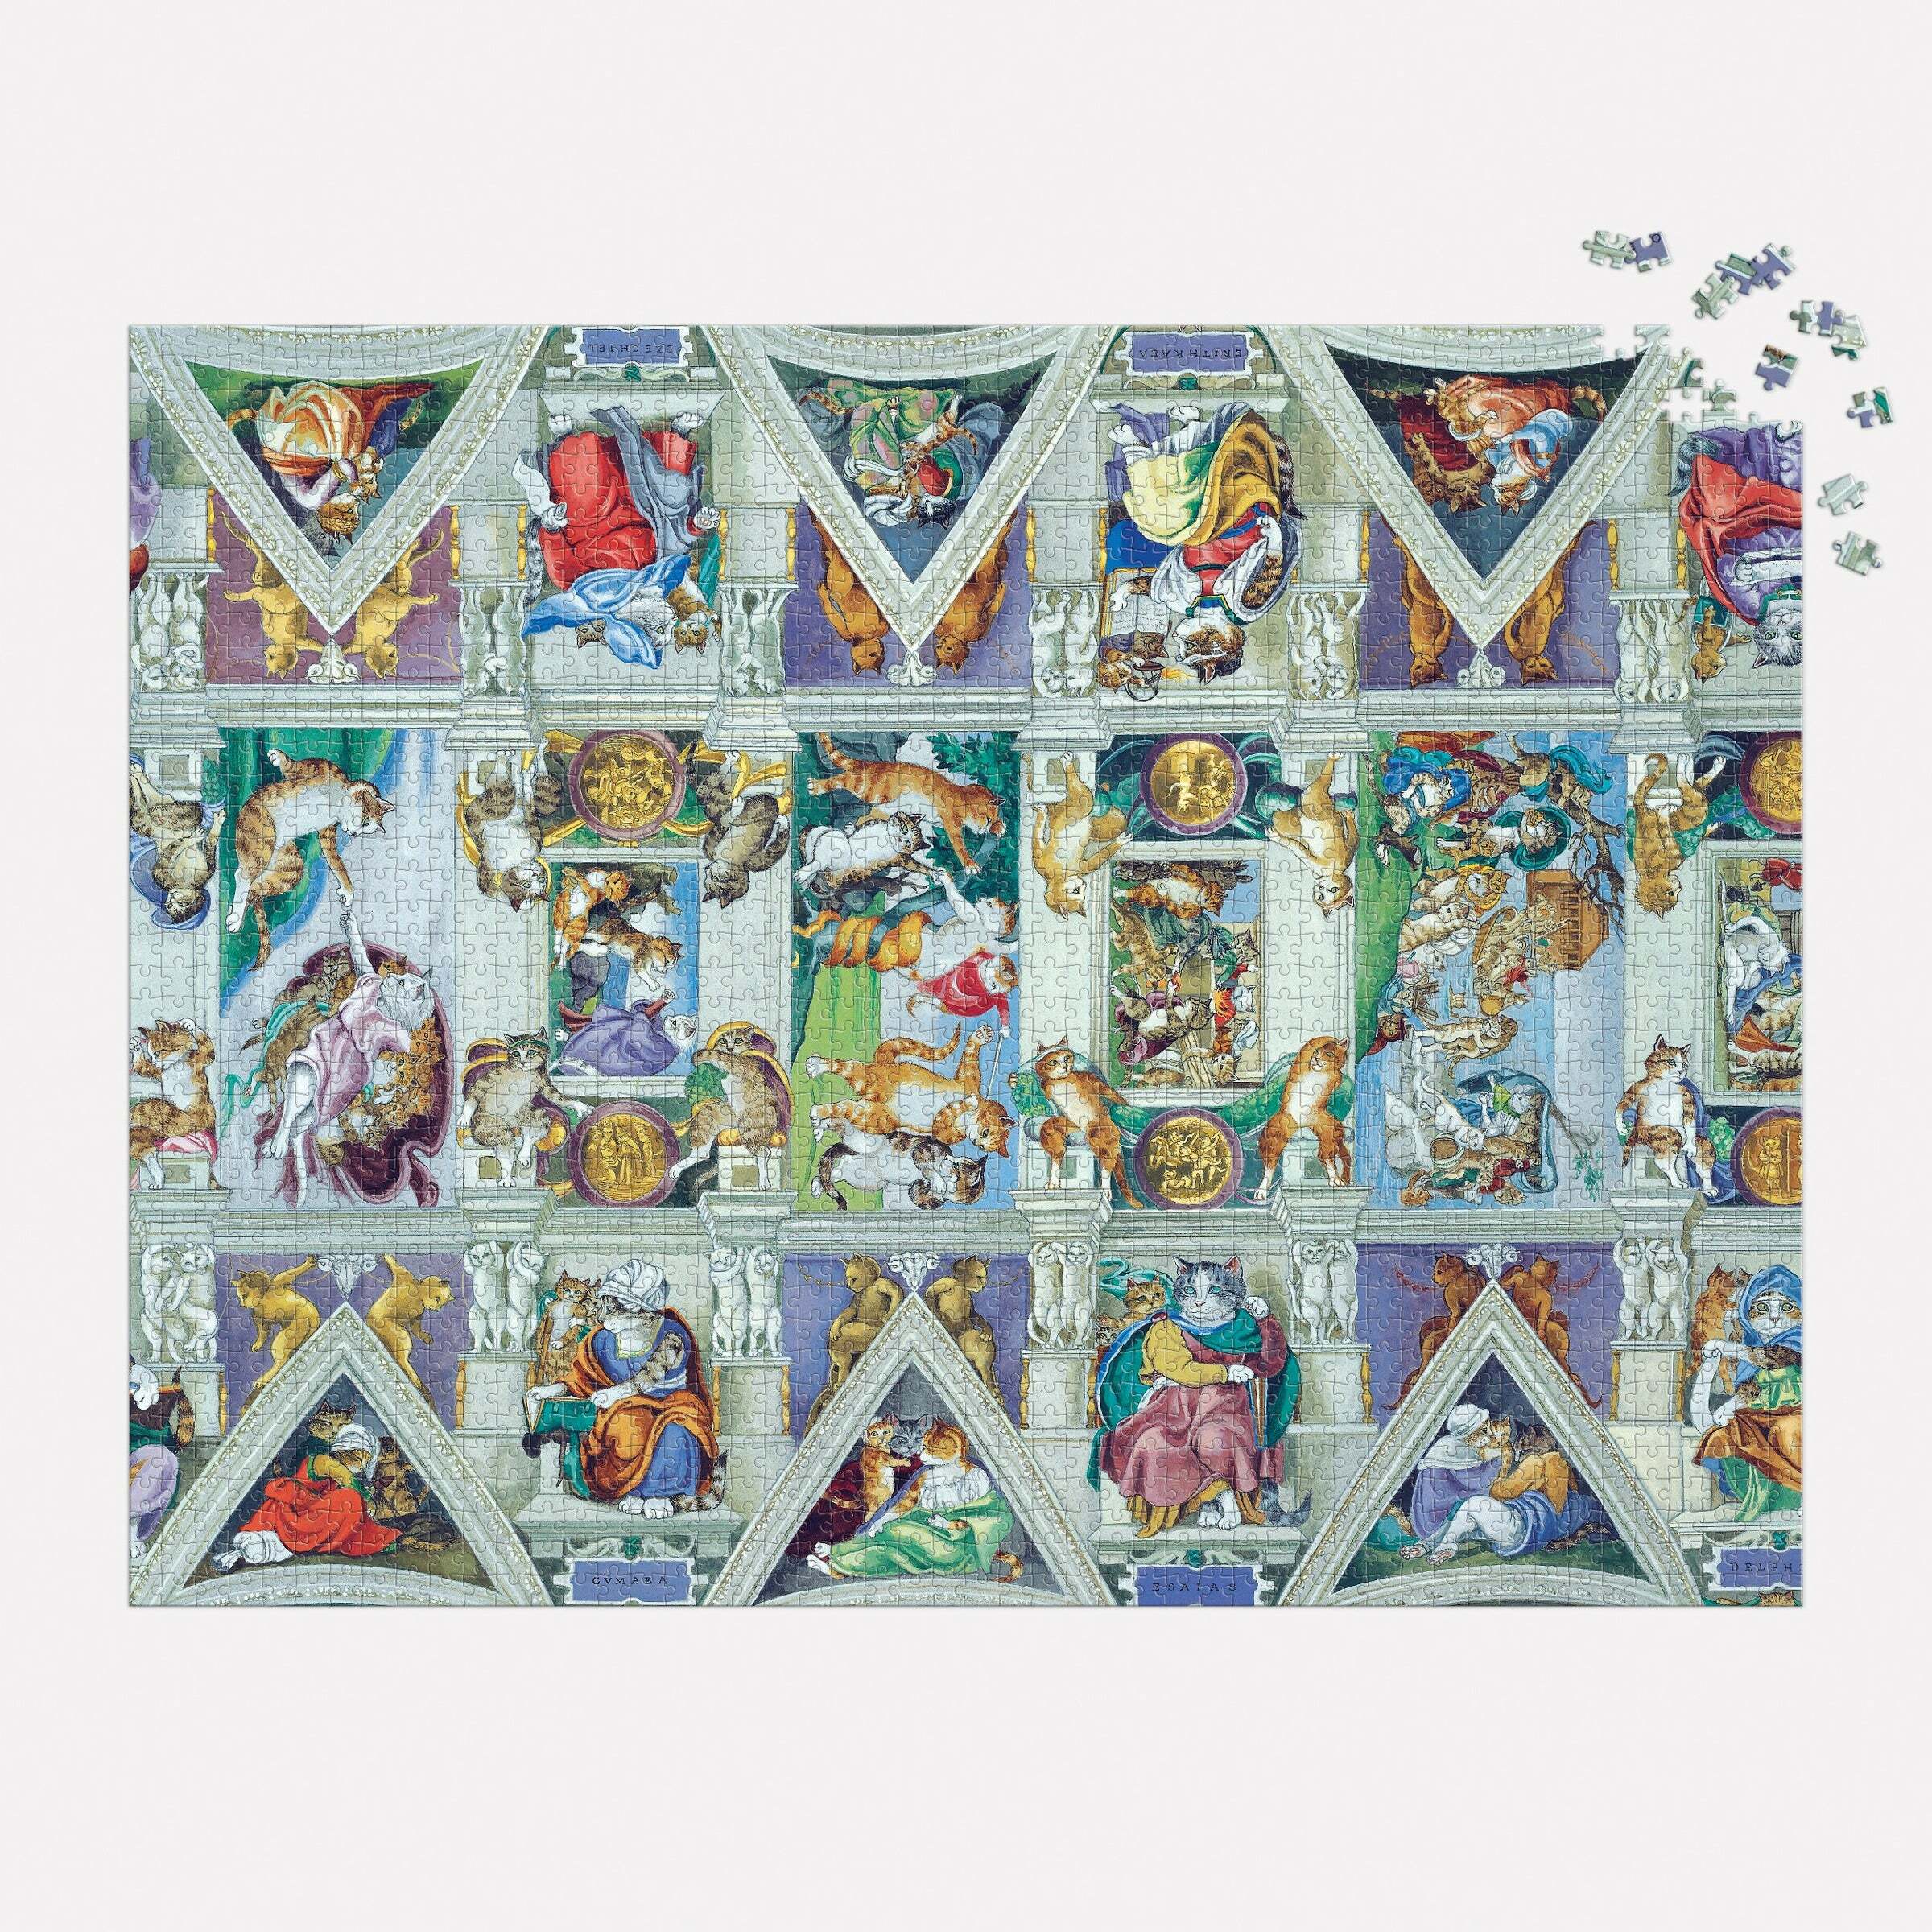 sistine-chapel-ceiling-meowsterpiece-of-western-art-2000-piece-jigsaw-puzzle-2000-piece-puzzles-susan-herbert-586782_2400x